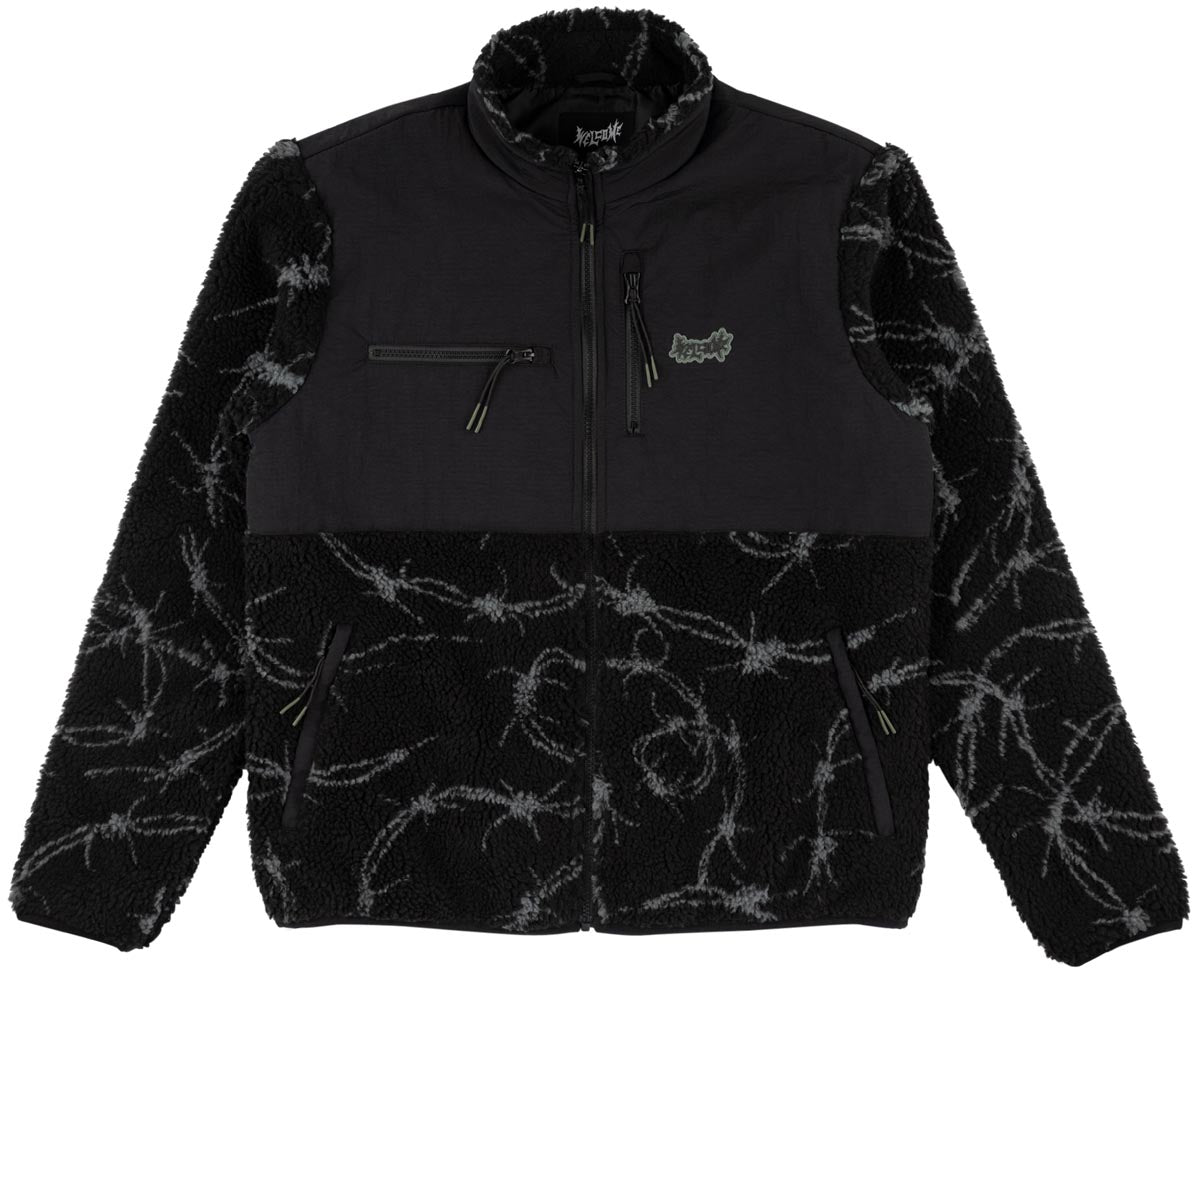 Welcome Wire Full-zip Sherpa Fleece Sweatshirt - Black image 3